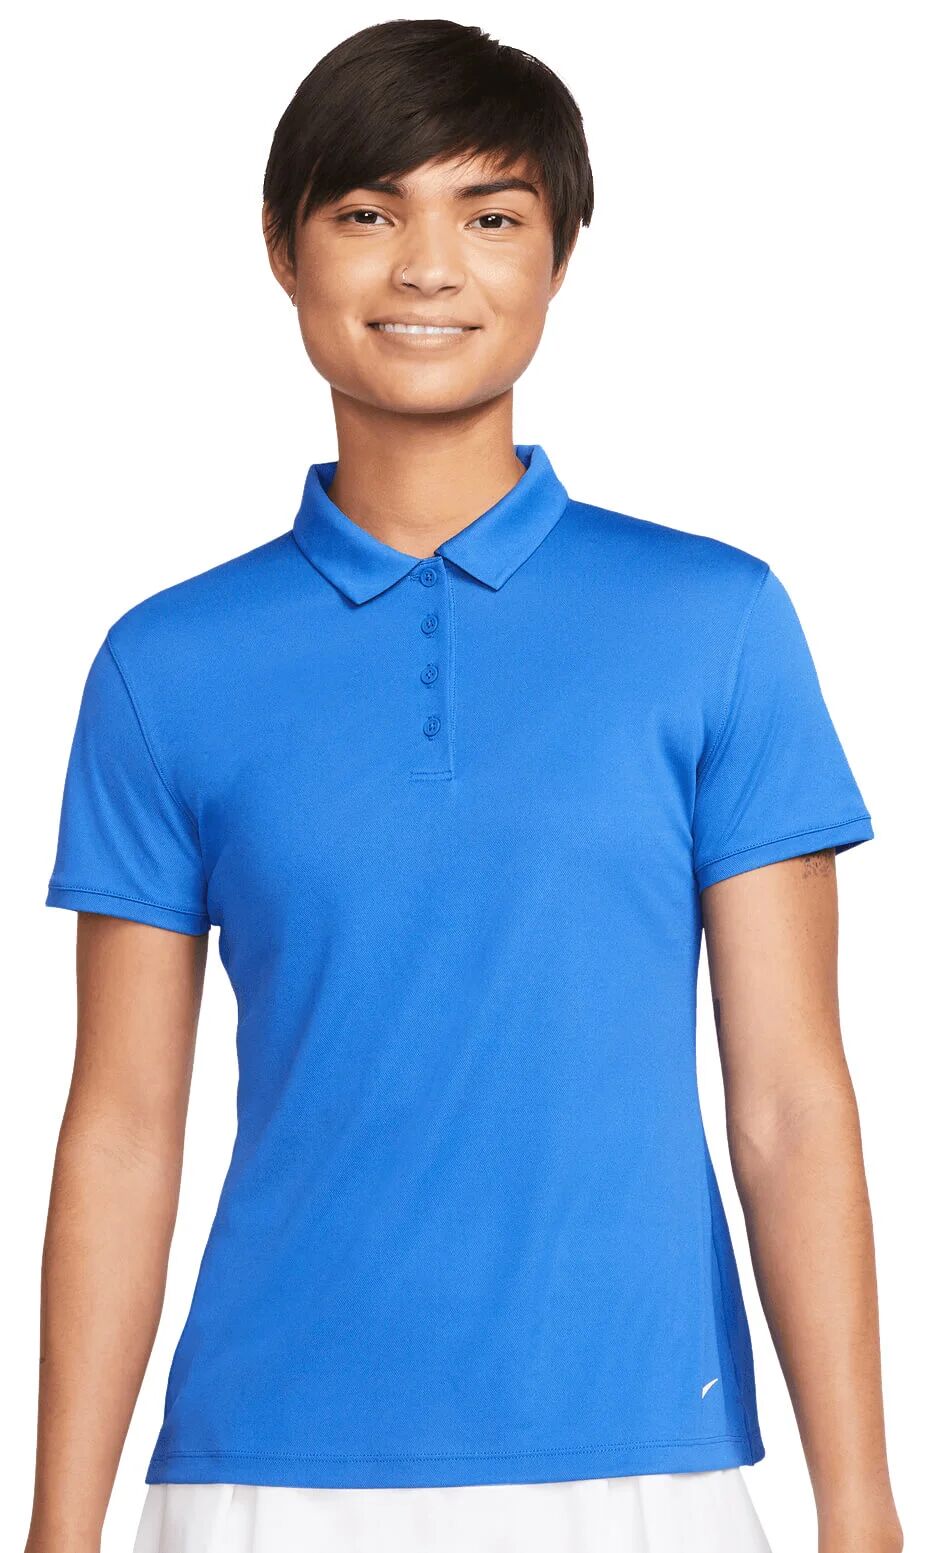 Nike Womens Dri-FIT Victory Golf Polo Shirt - Blue, Size: X-Large